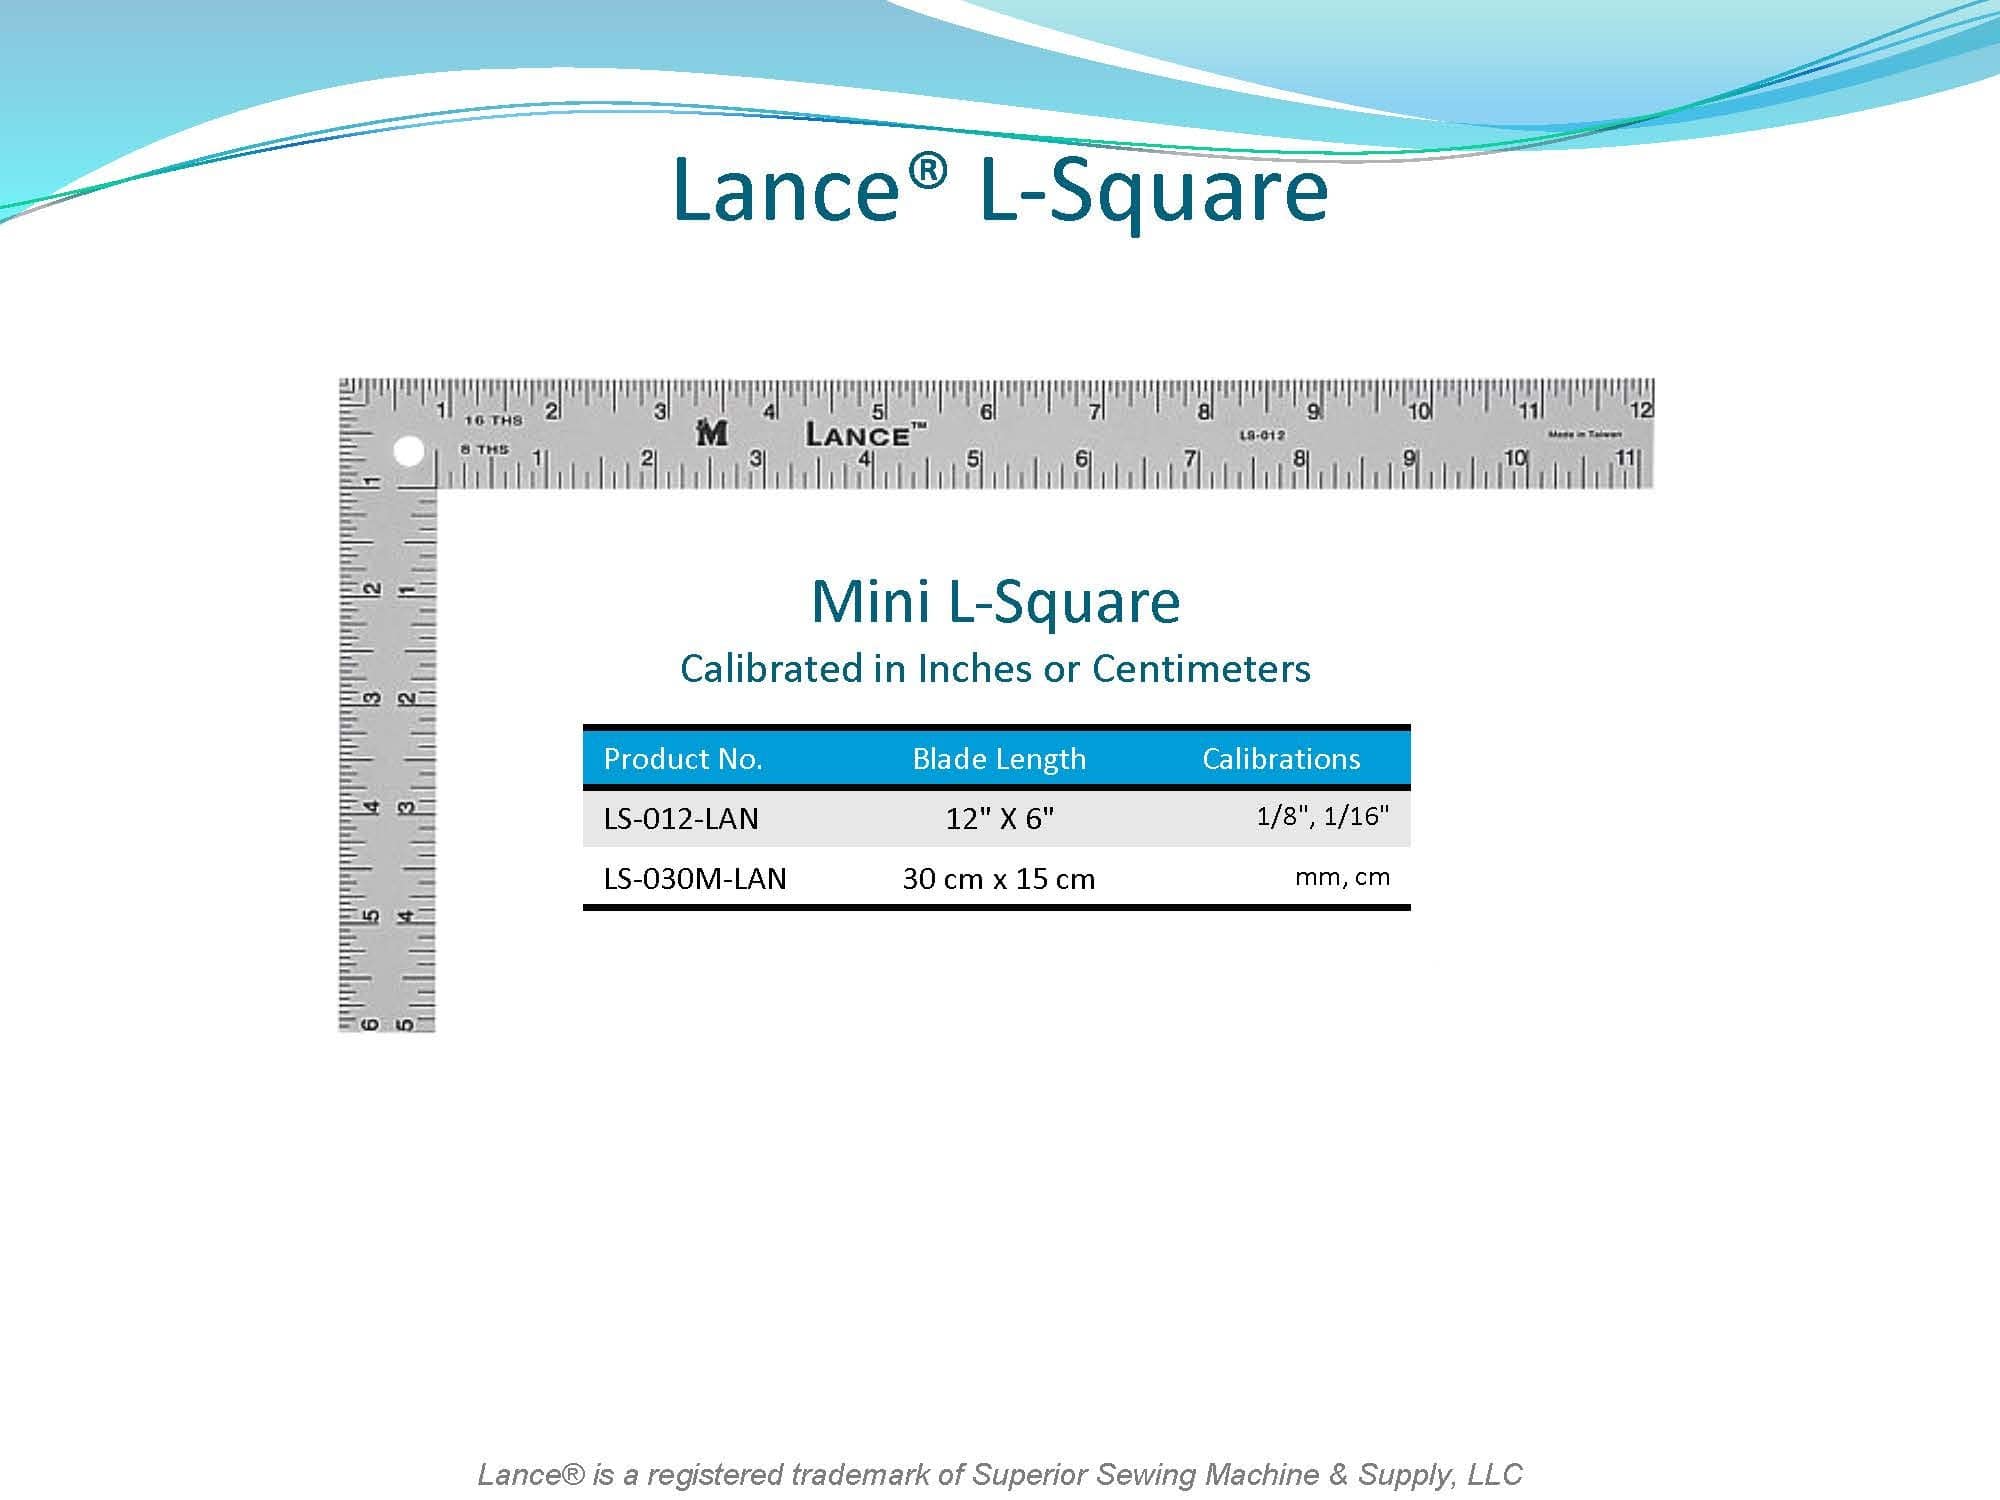 LANCE L-SQUARE

MINI L-SQUARE
CALIBRATED in INCHES or METRIC
LS-012-LAN - 12" X 6"
LS-030M-LAN - 30cm X 15cm